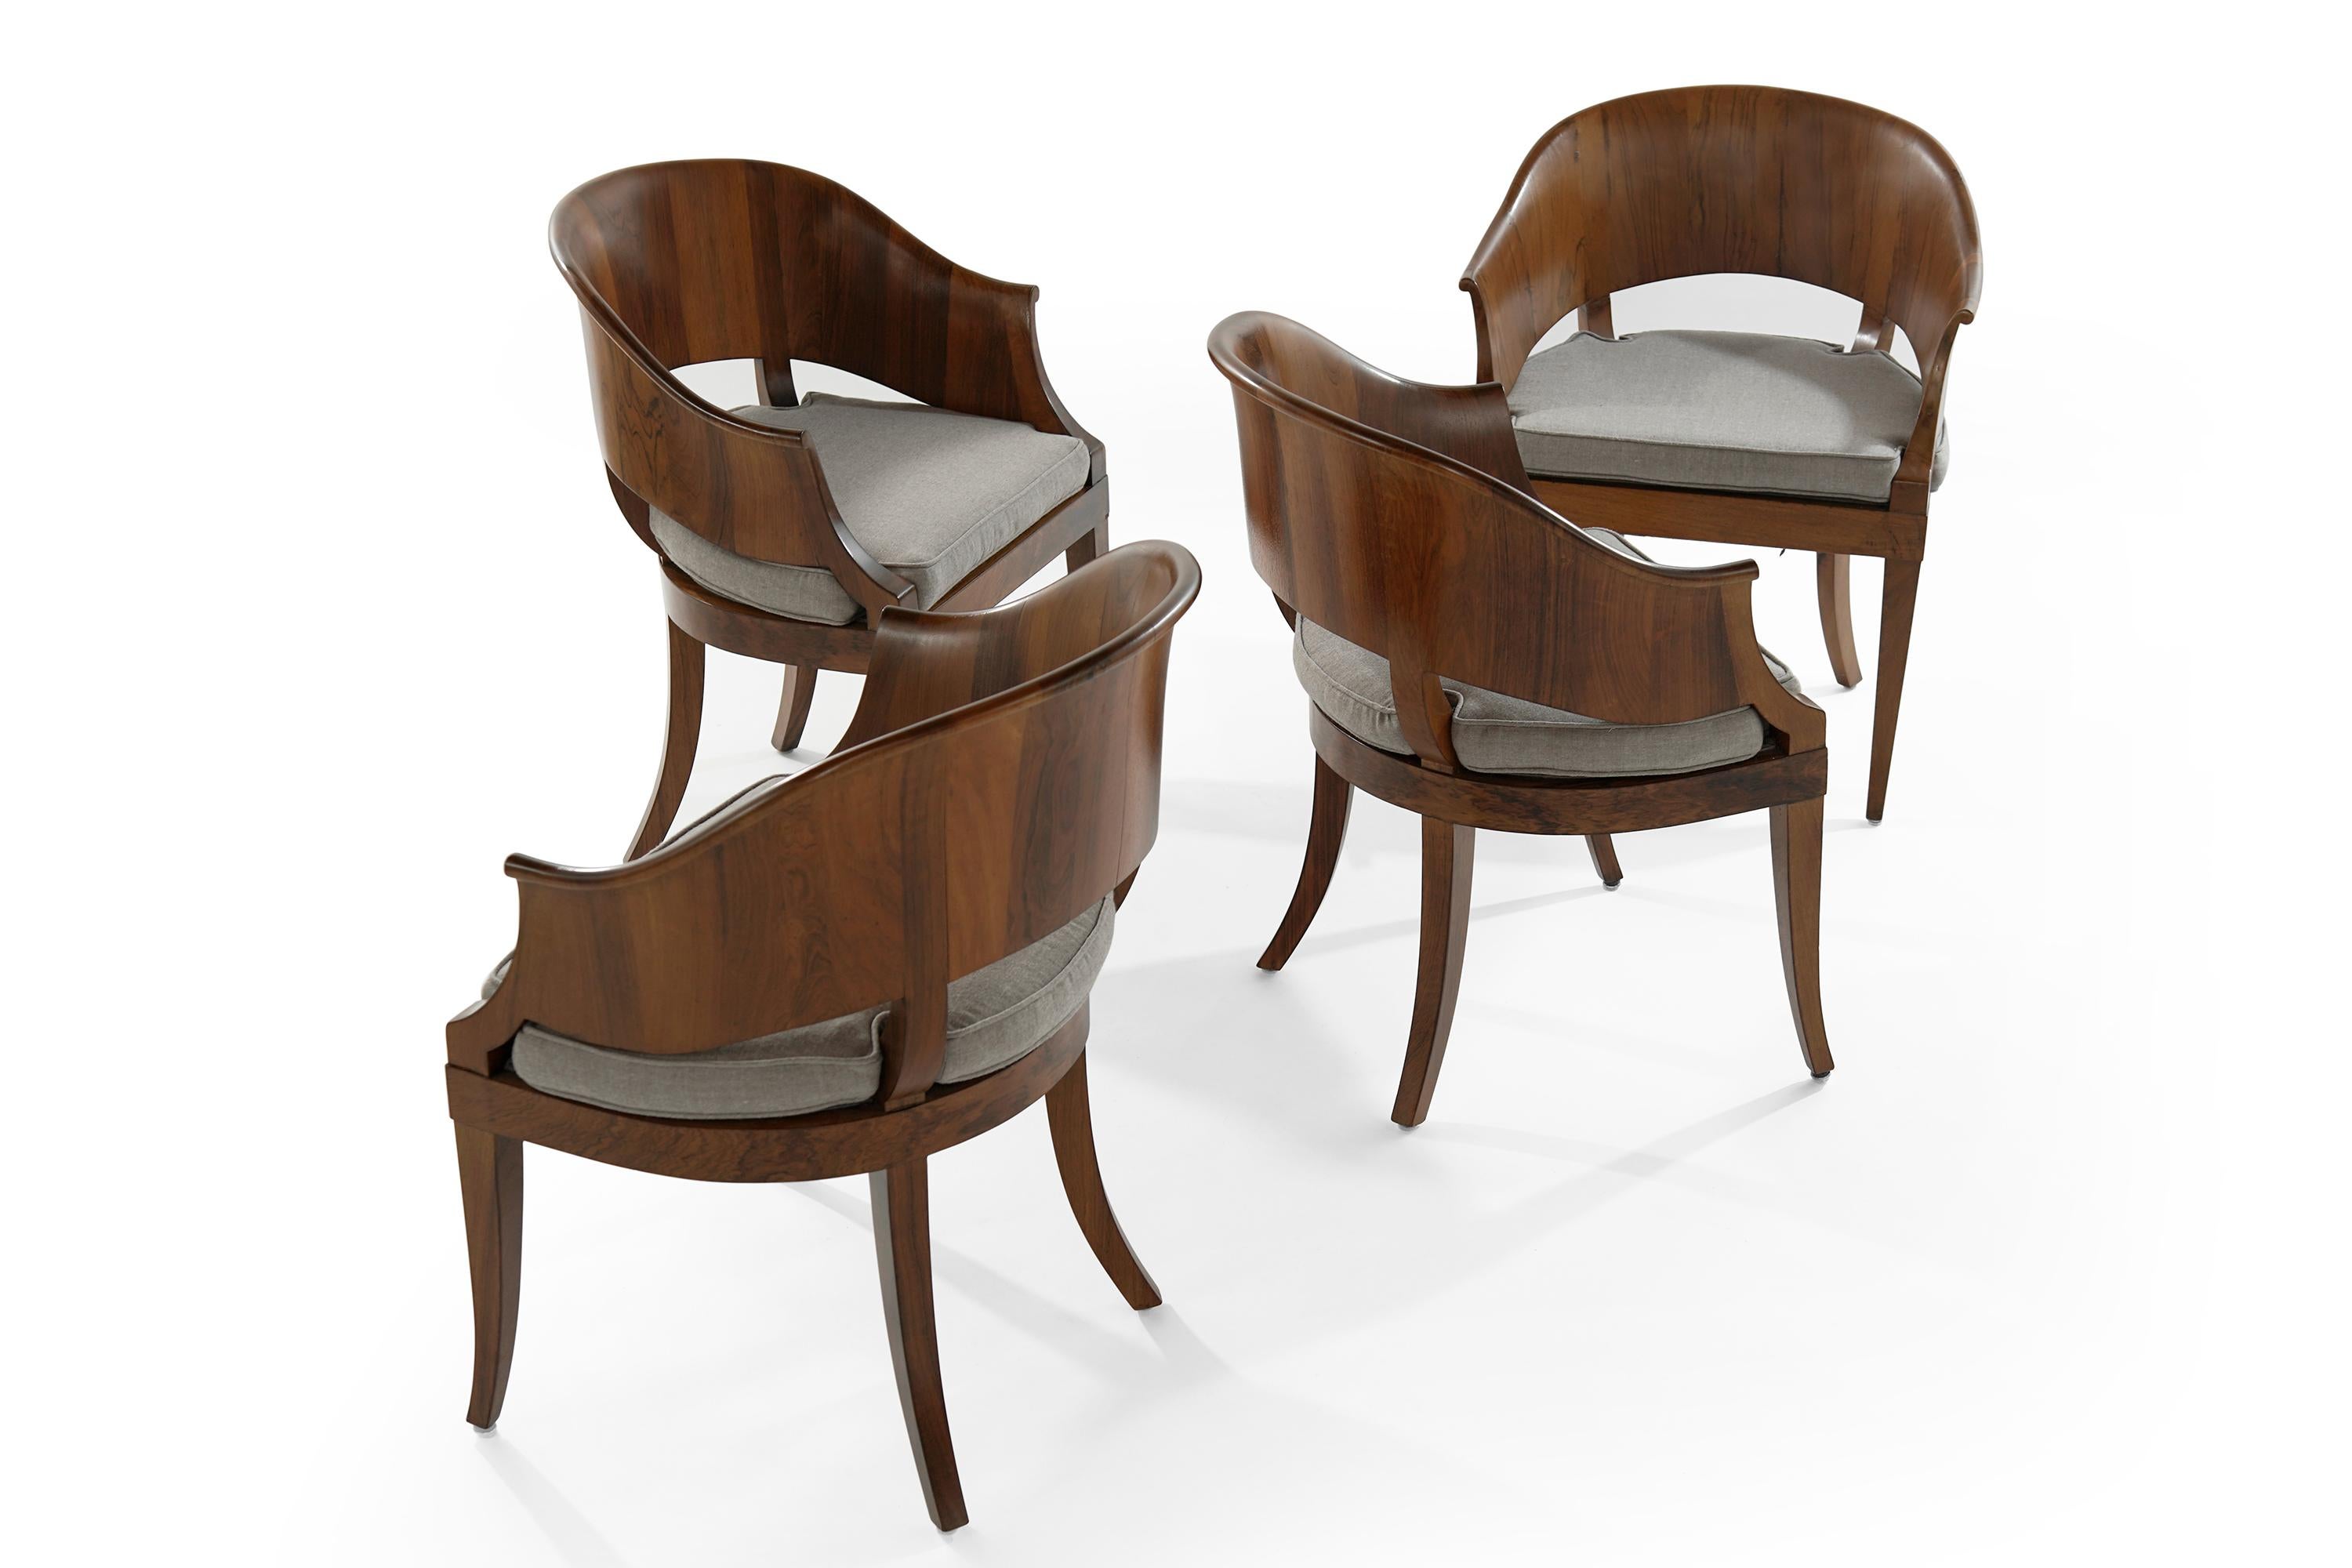 American Art Deco Style Walnut Armchairs, c. 1940s